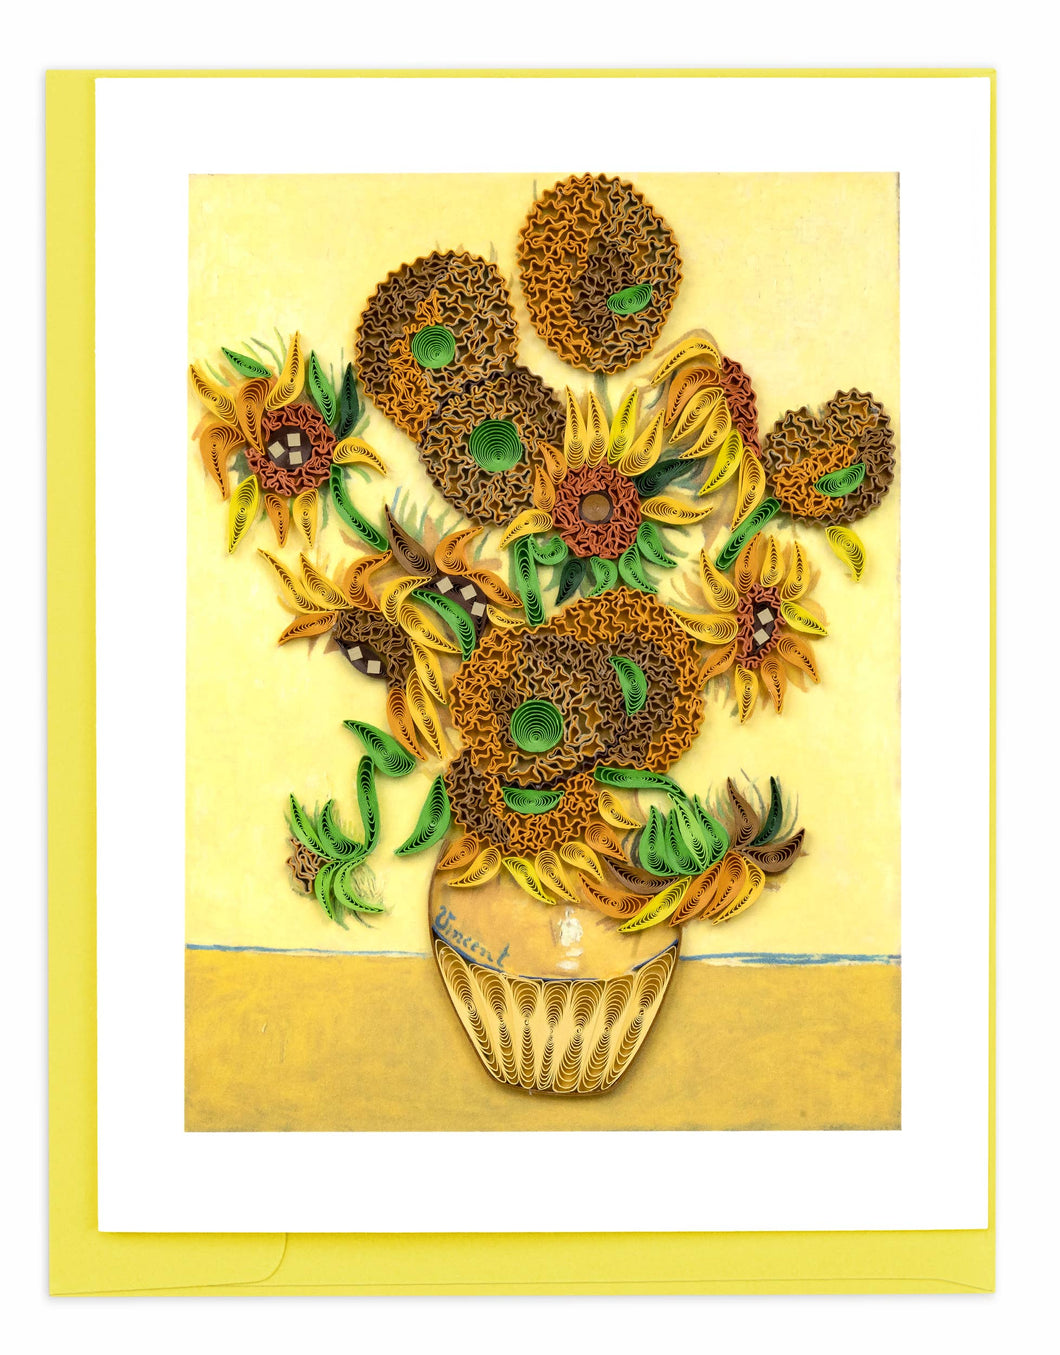 Artist Series - Quilled Sunflowers, Van Gogh Greeting Card